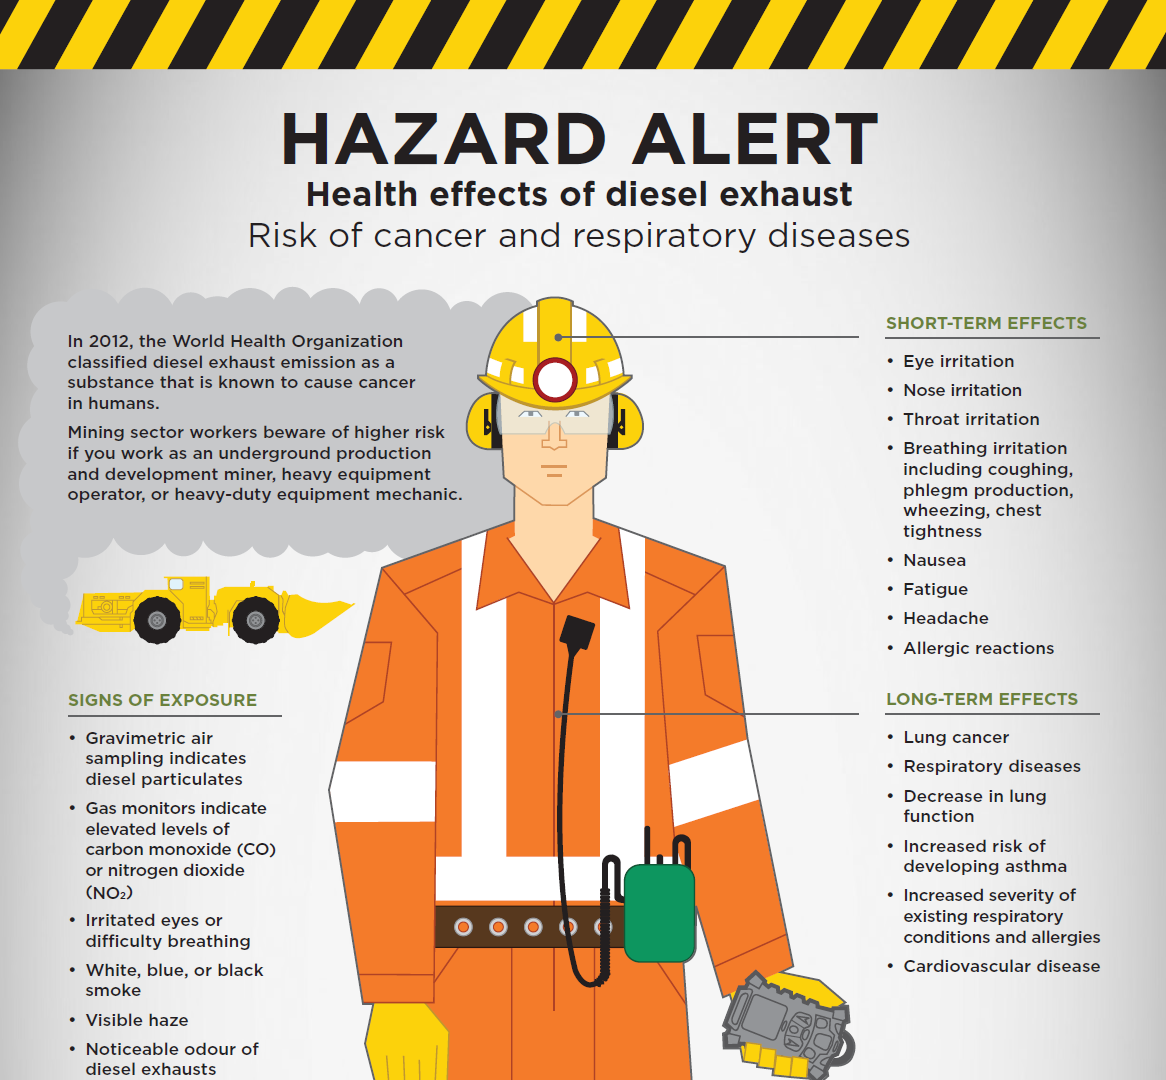 Hazard alert poster on health effects of diesel exhaust